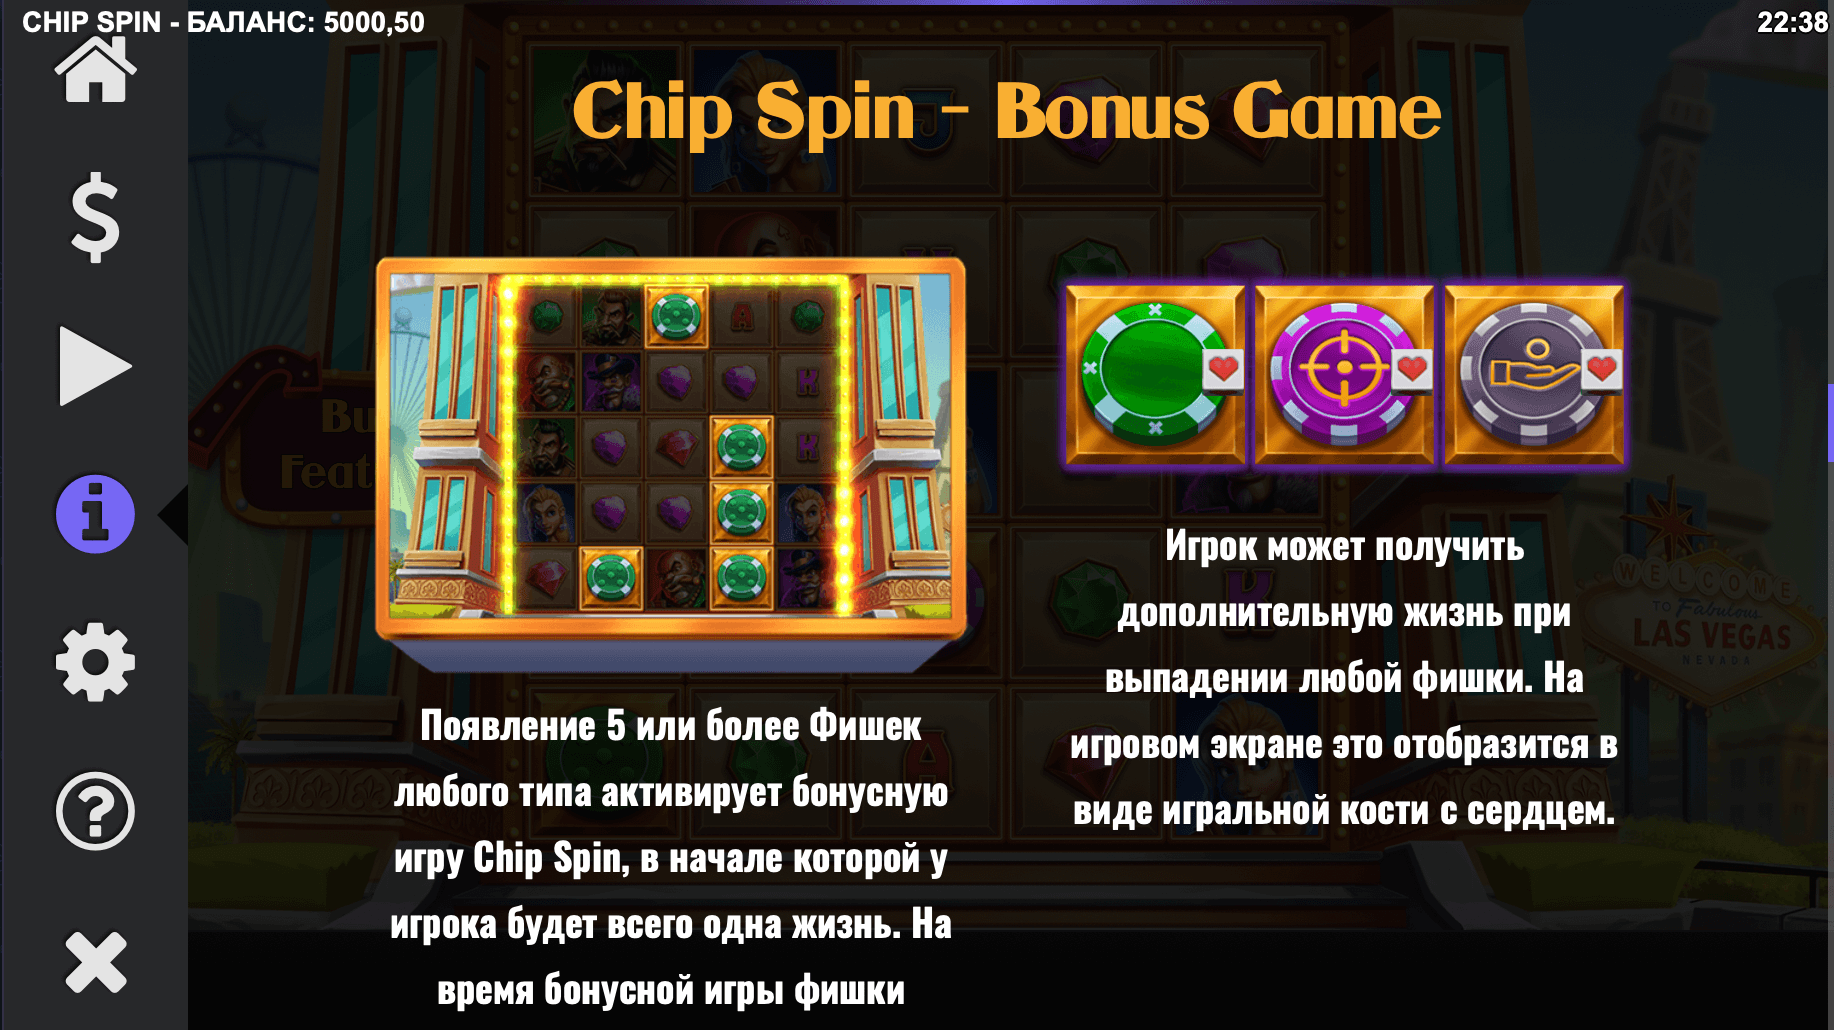 Chip Spin عملية اللعبة